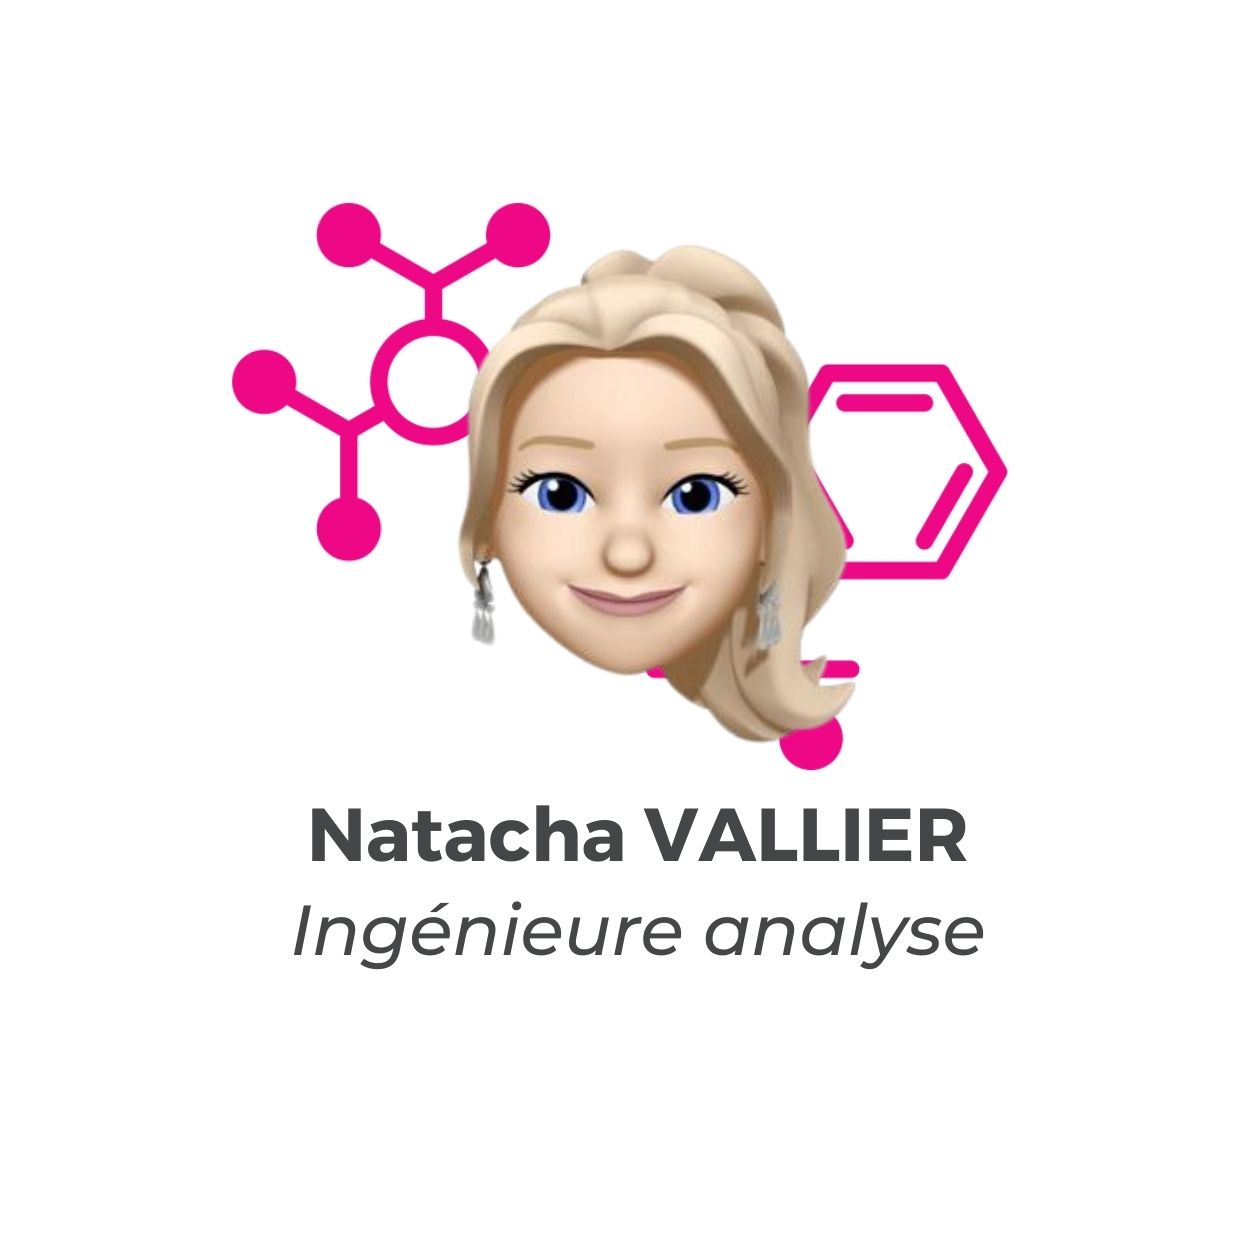 Natacha VALLIER - Ingénieure analyse